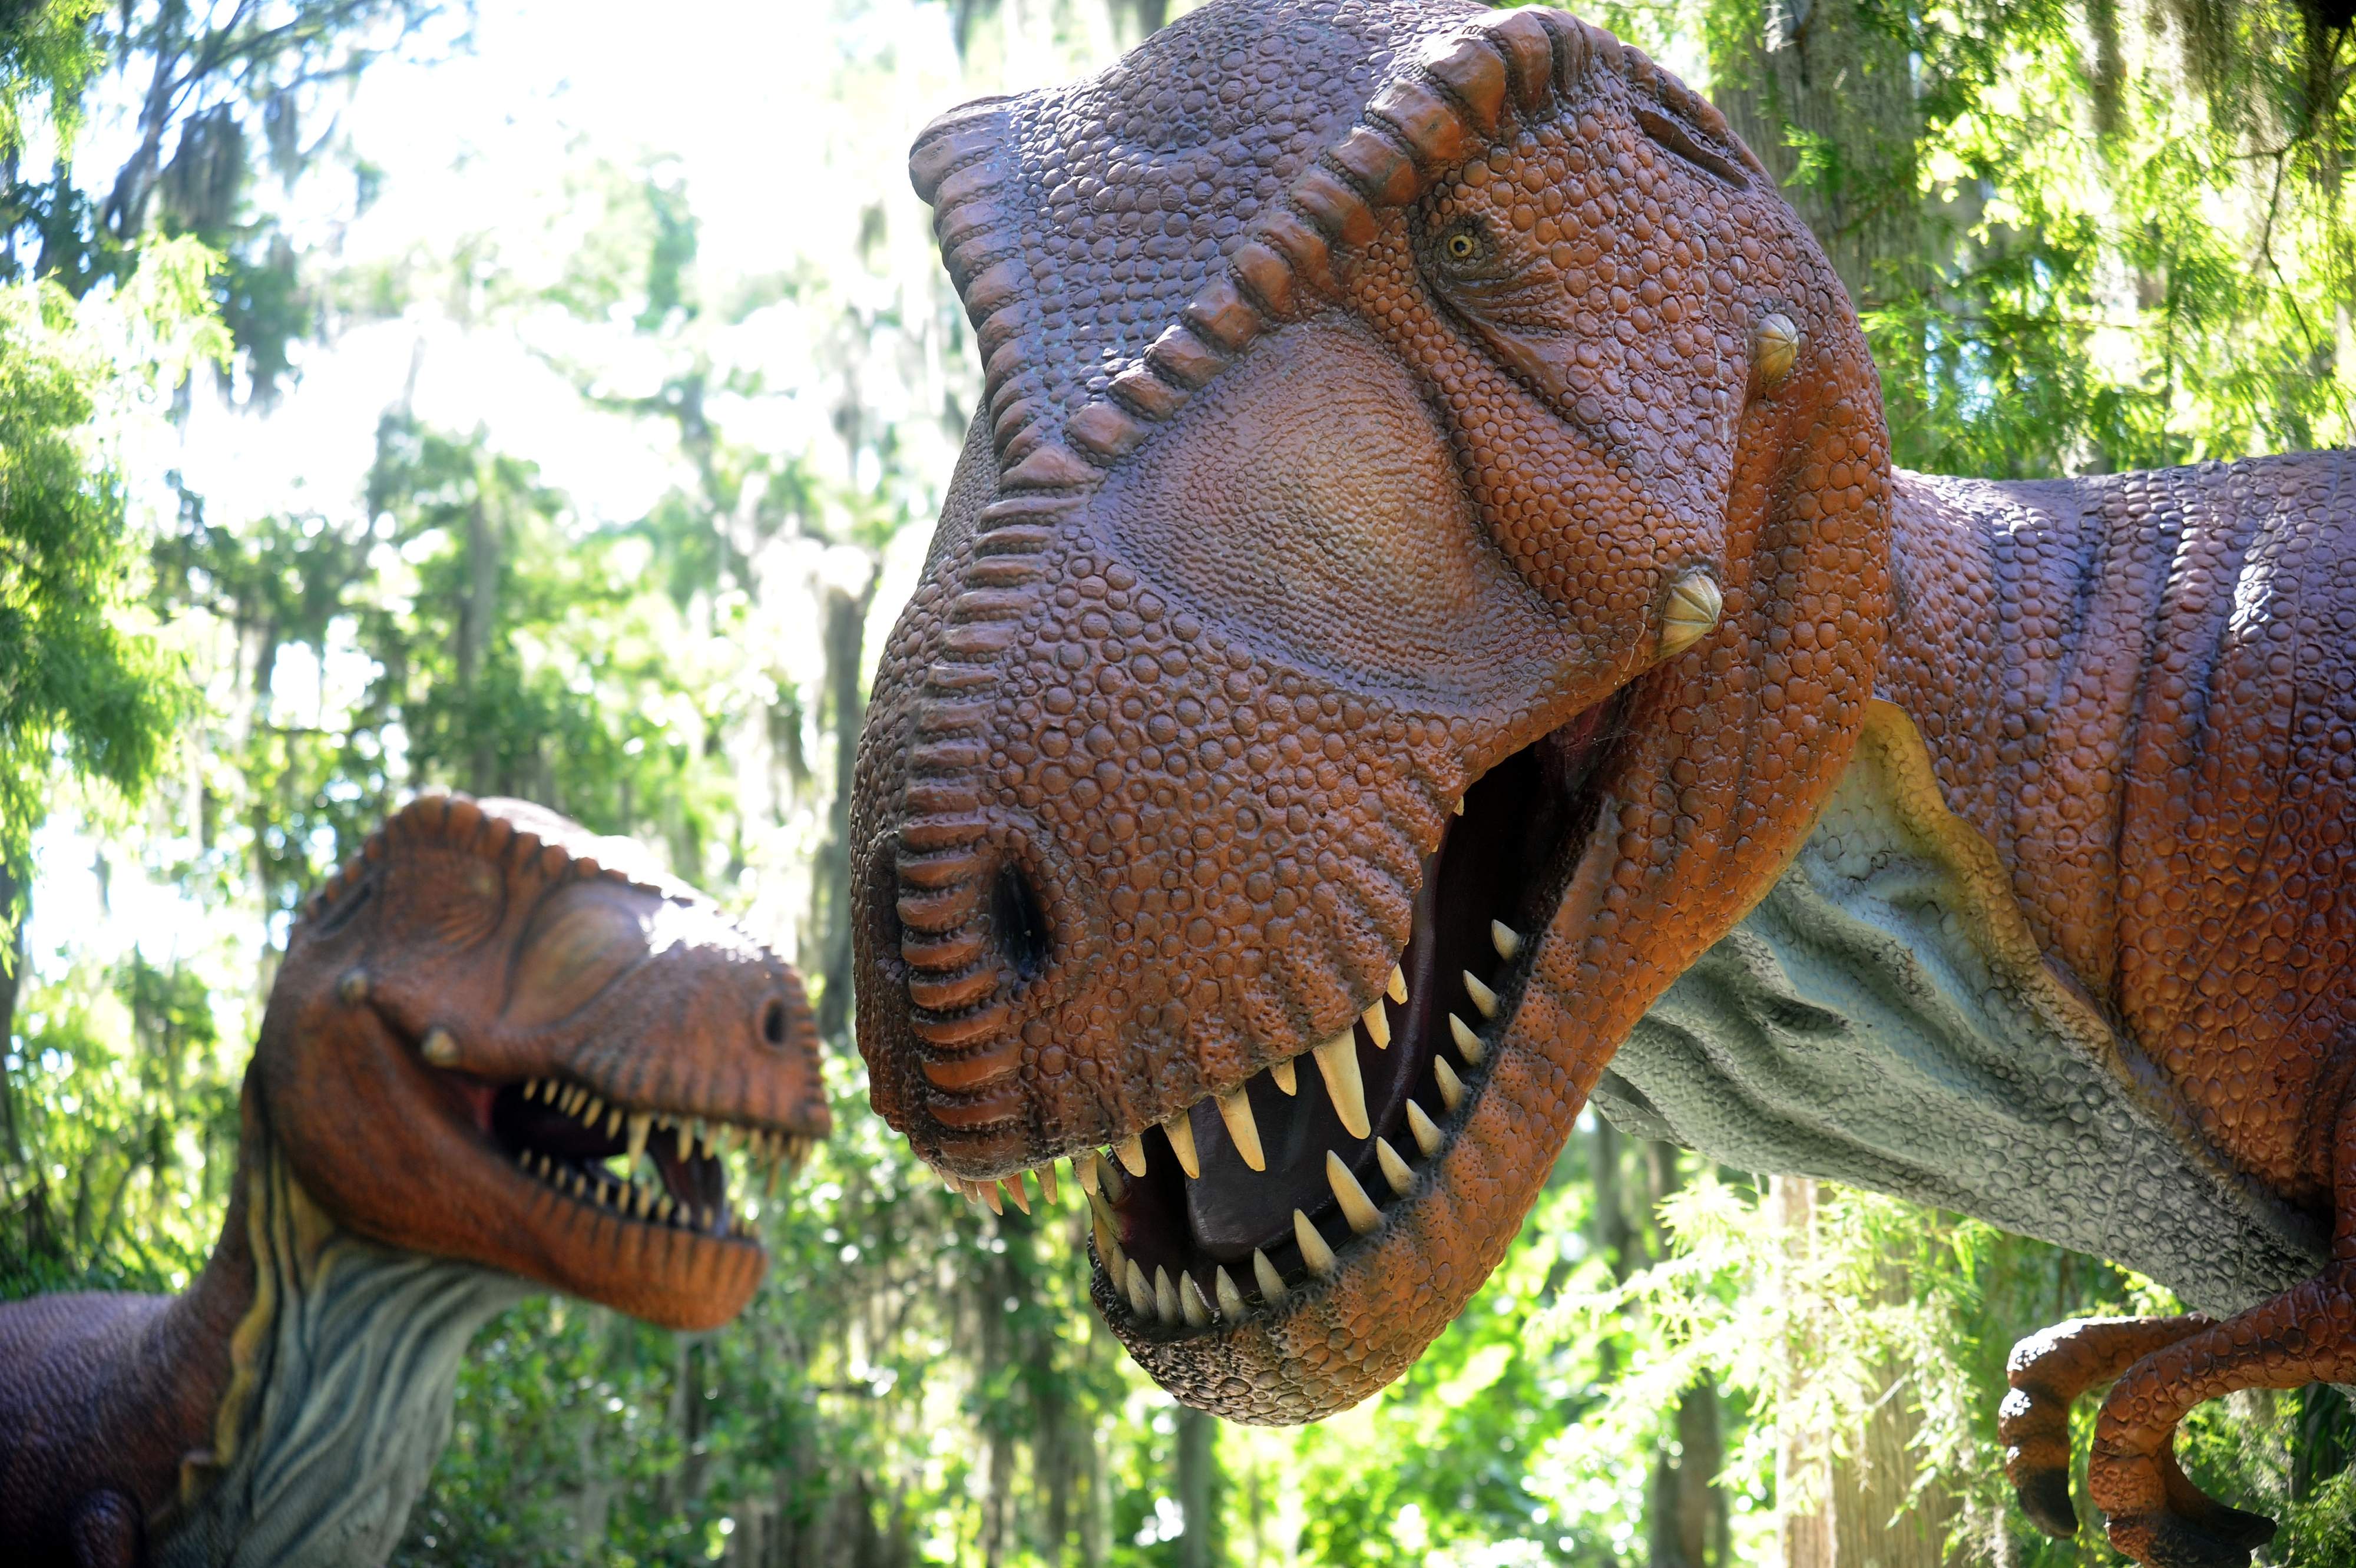 Jurassic World' spike expected at Plant City's Dinosaur World | tbo.com